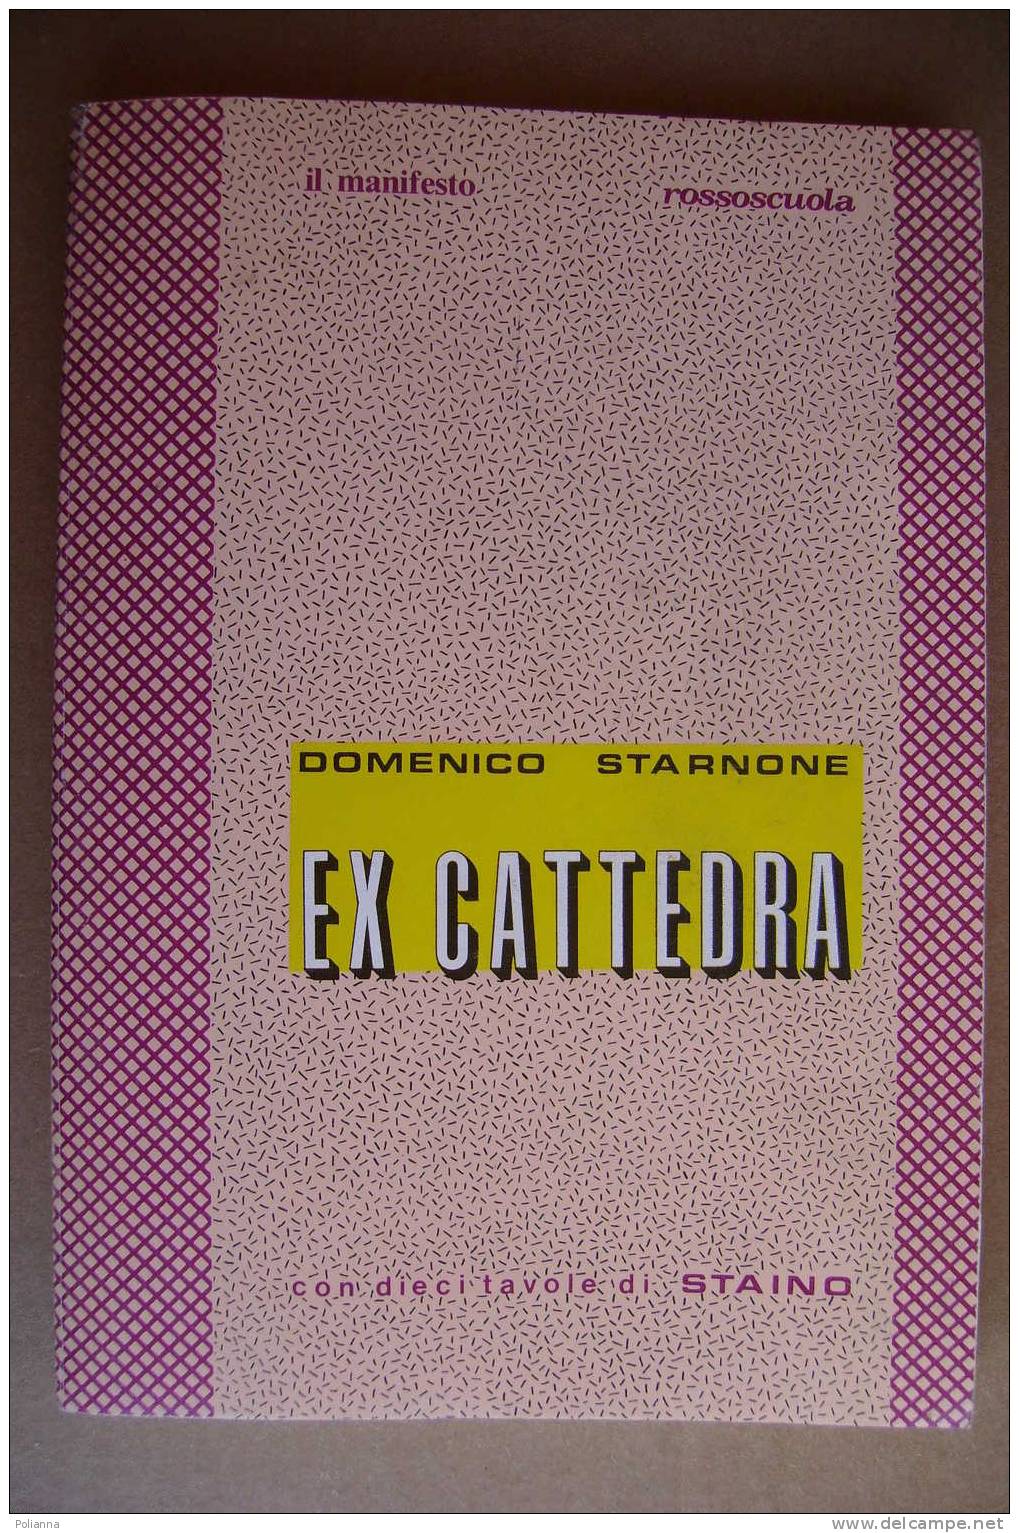 PAO/59 Starnone EX CATTEDRA Il Manifesto - Suppl. A Rossoscuola N.38/10 Tav. STAINO - Société, Politique, économie